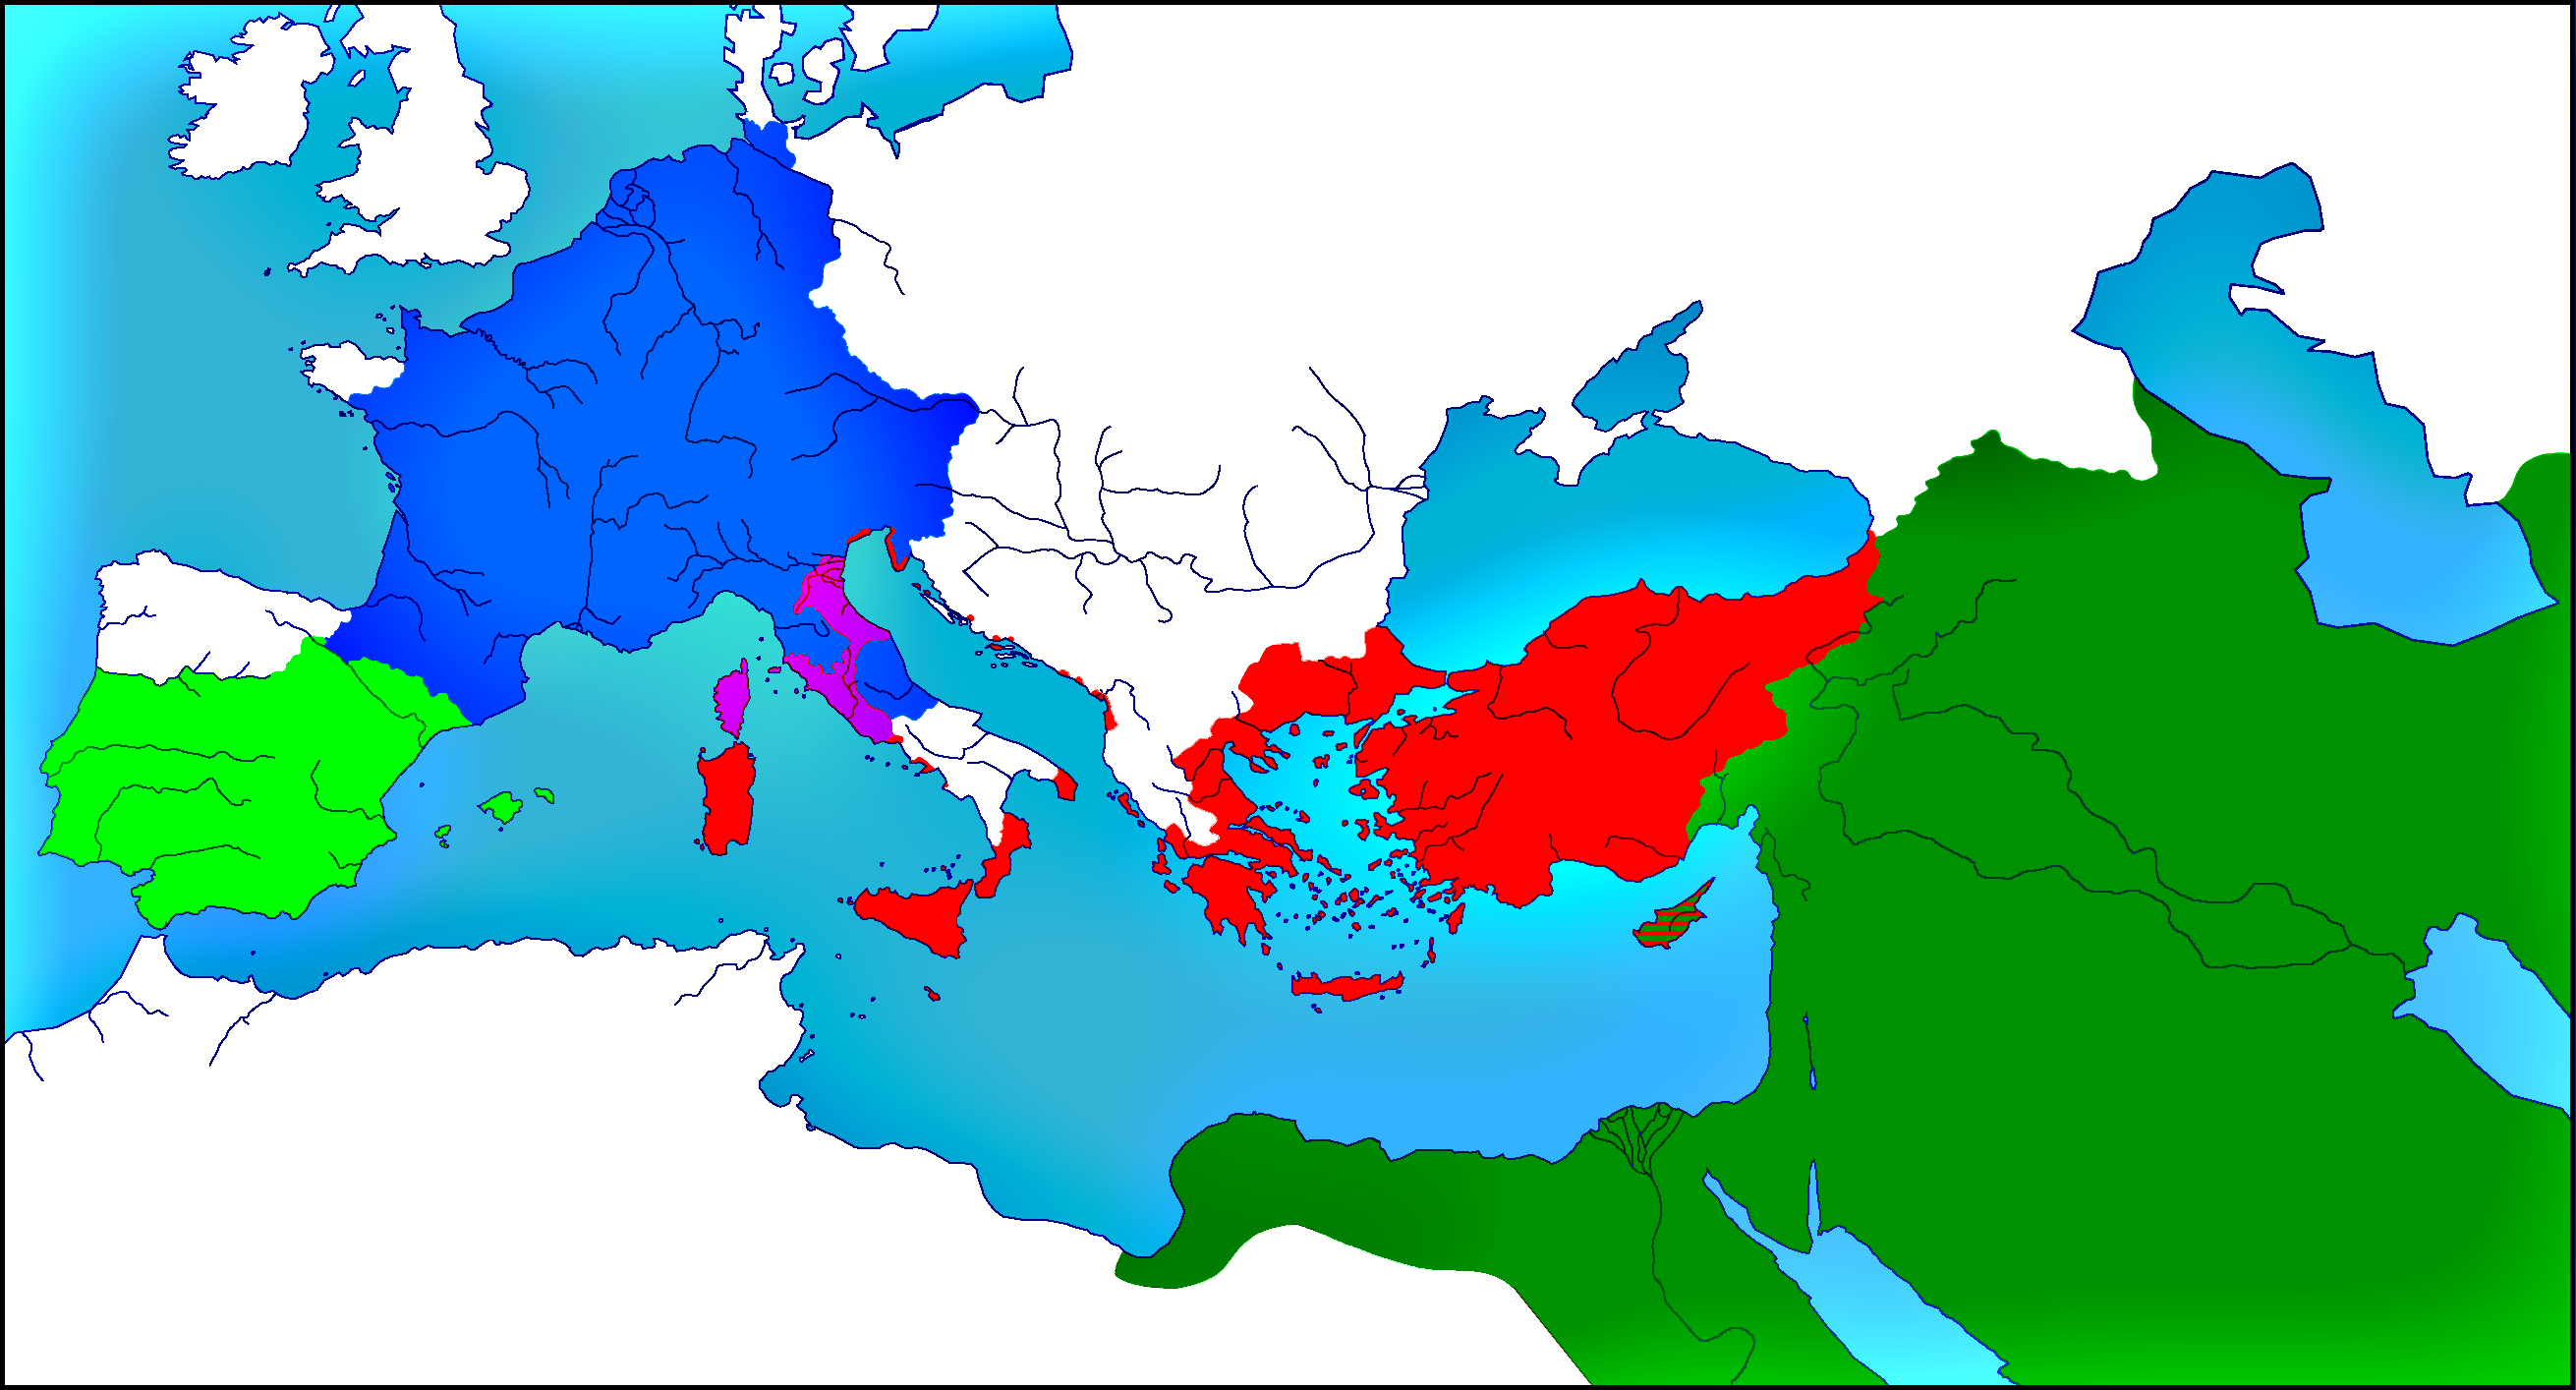 AD 814 - The Empires of the Mediterranean Sea